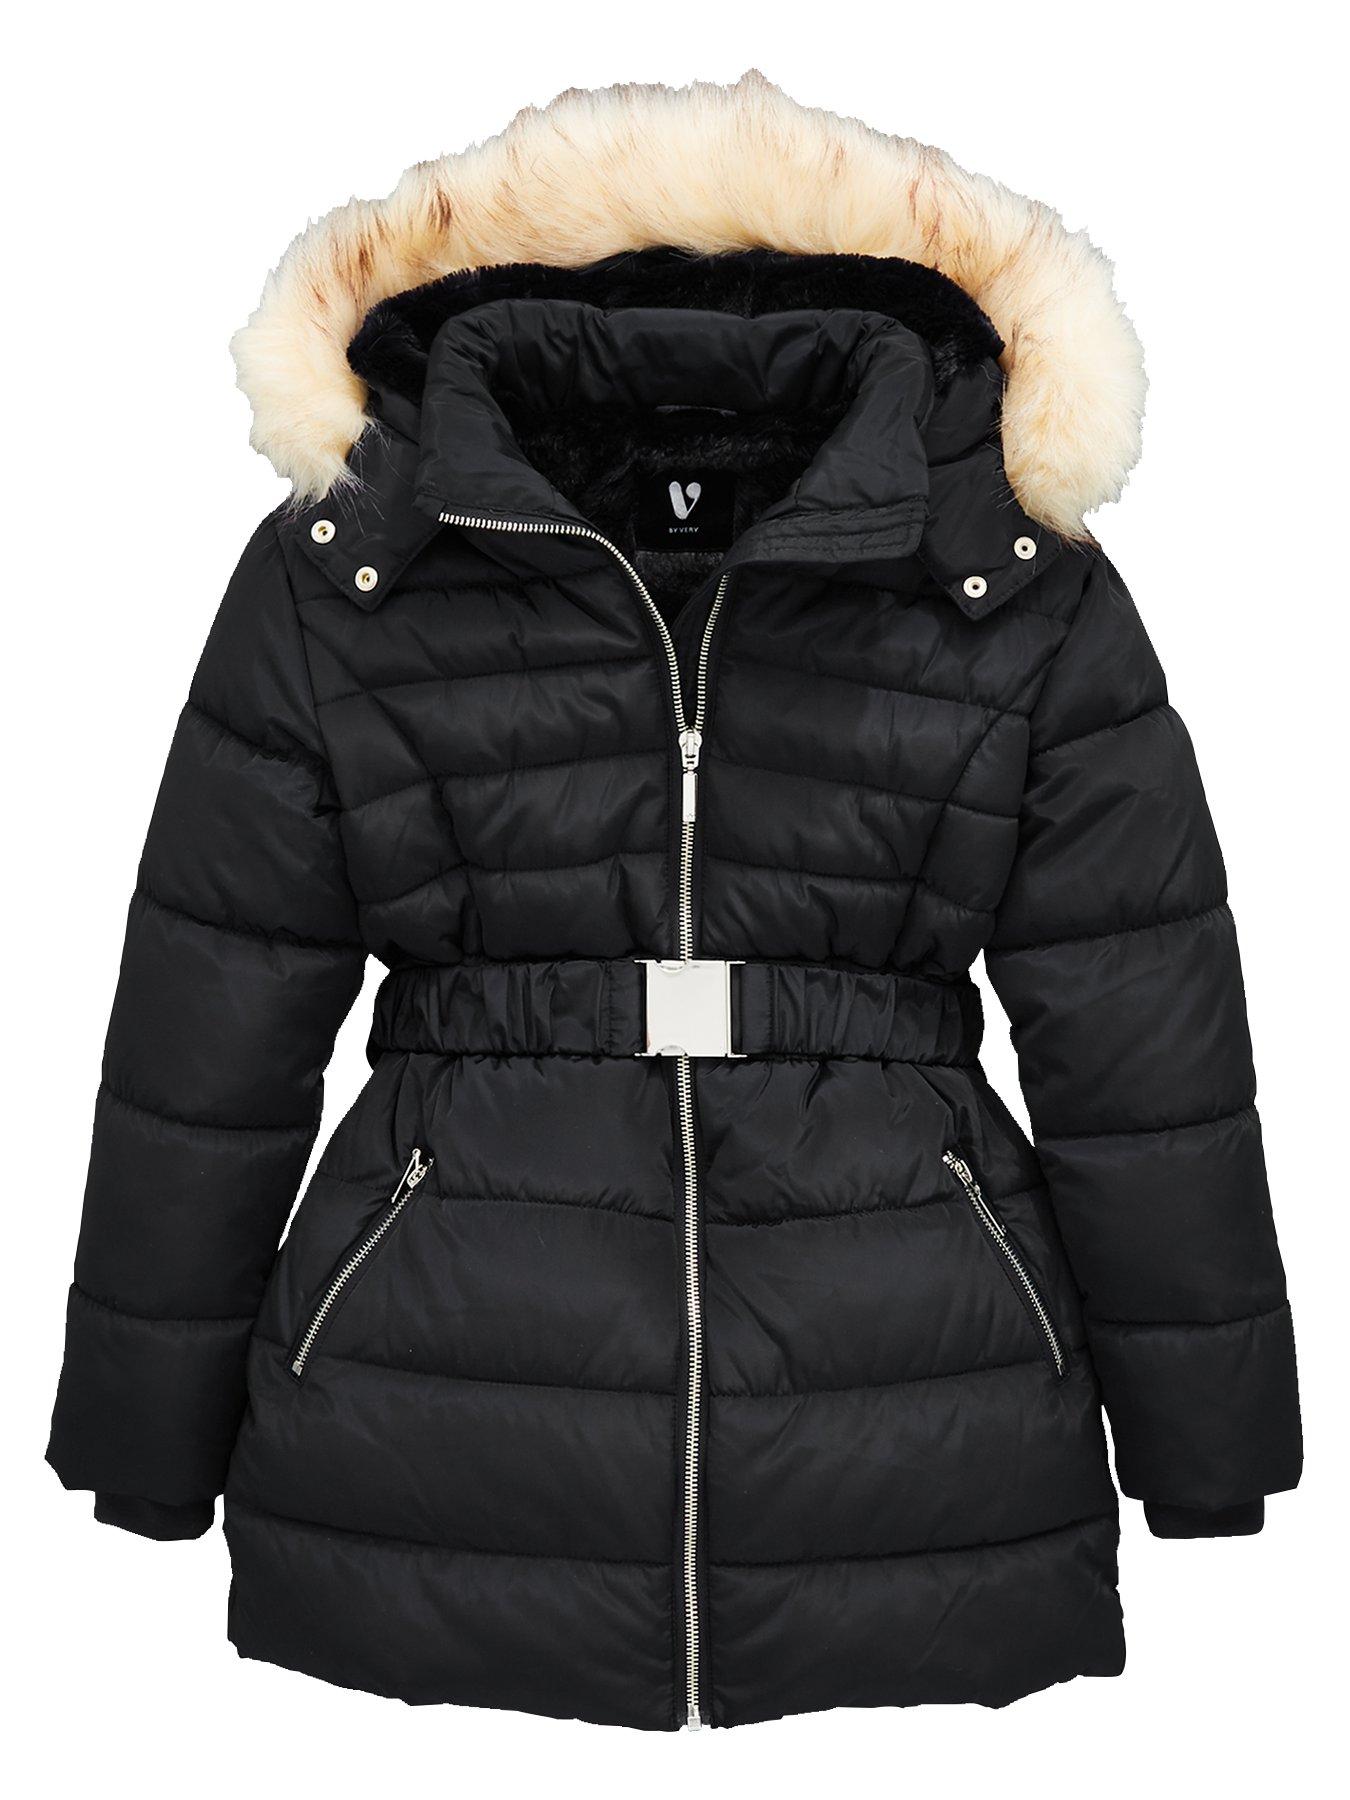 girls winter jacket uk